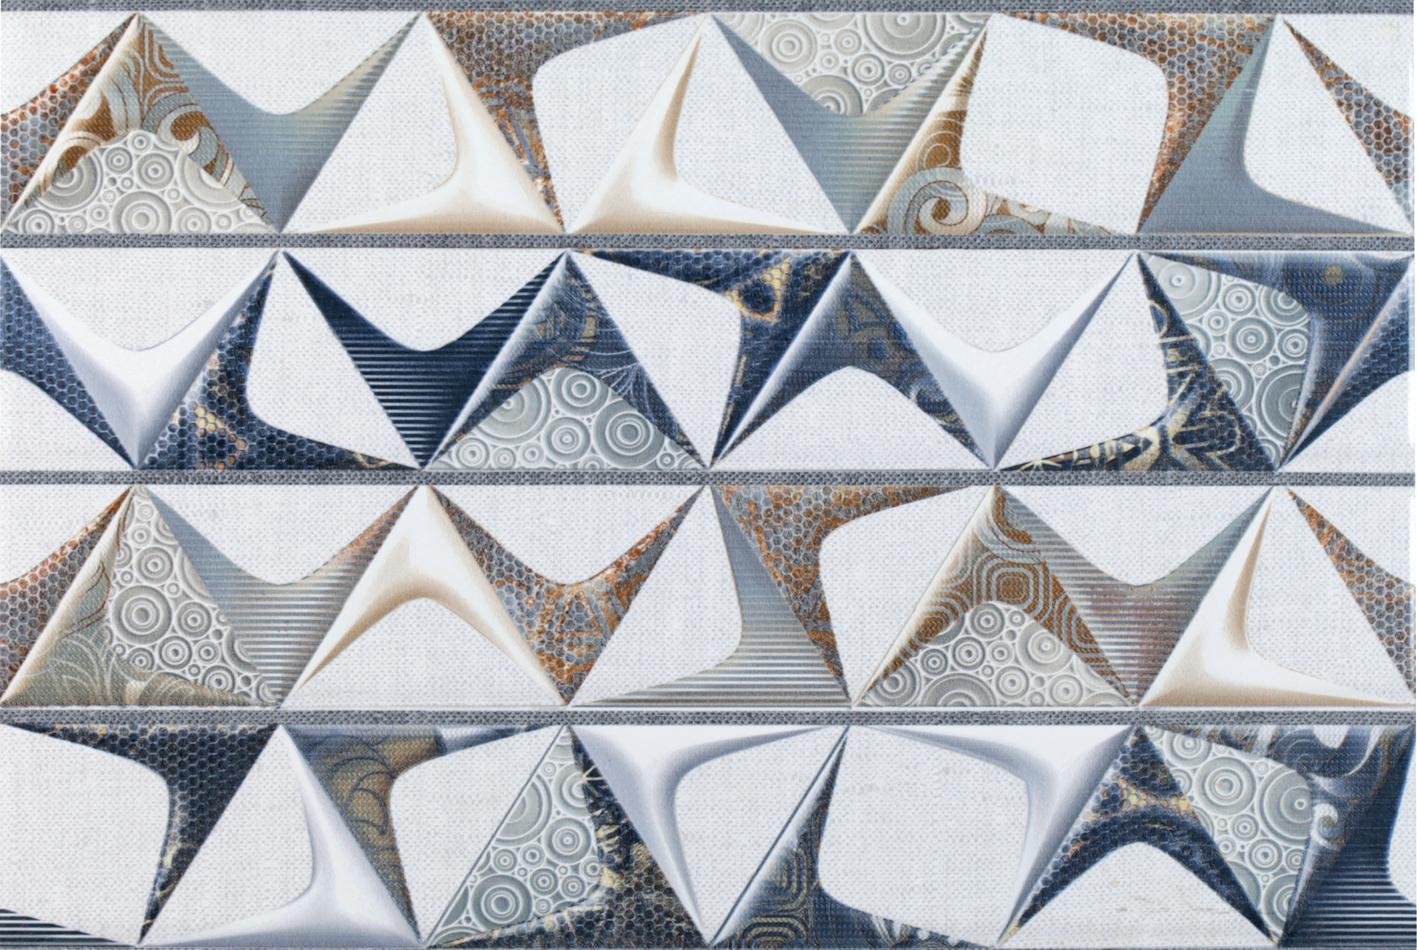 Geometric Tiles for Bathroom Tiles, Kitchen Tiles, Accent Tiles